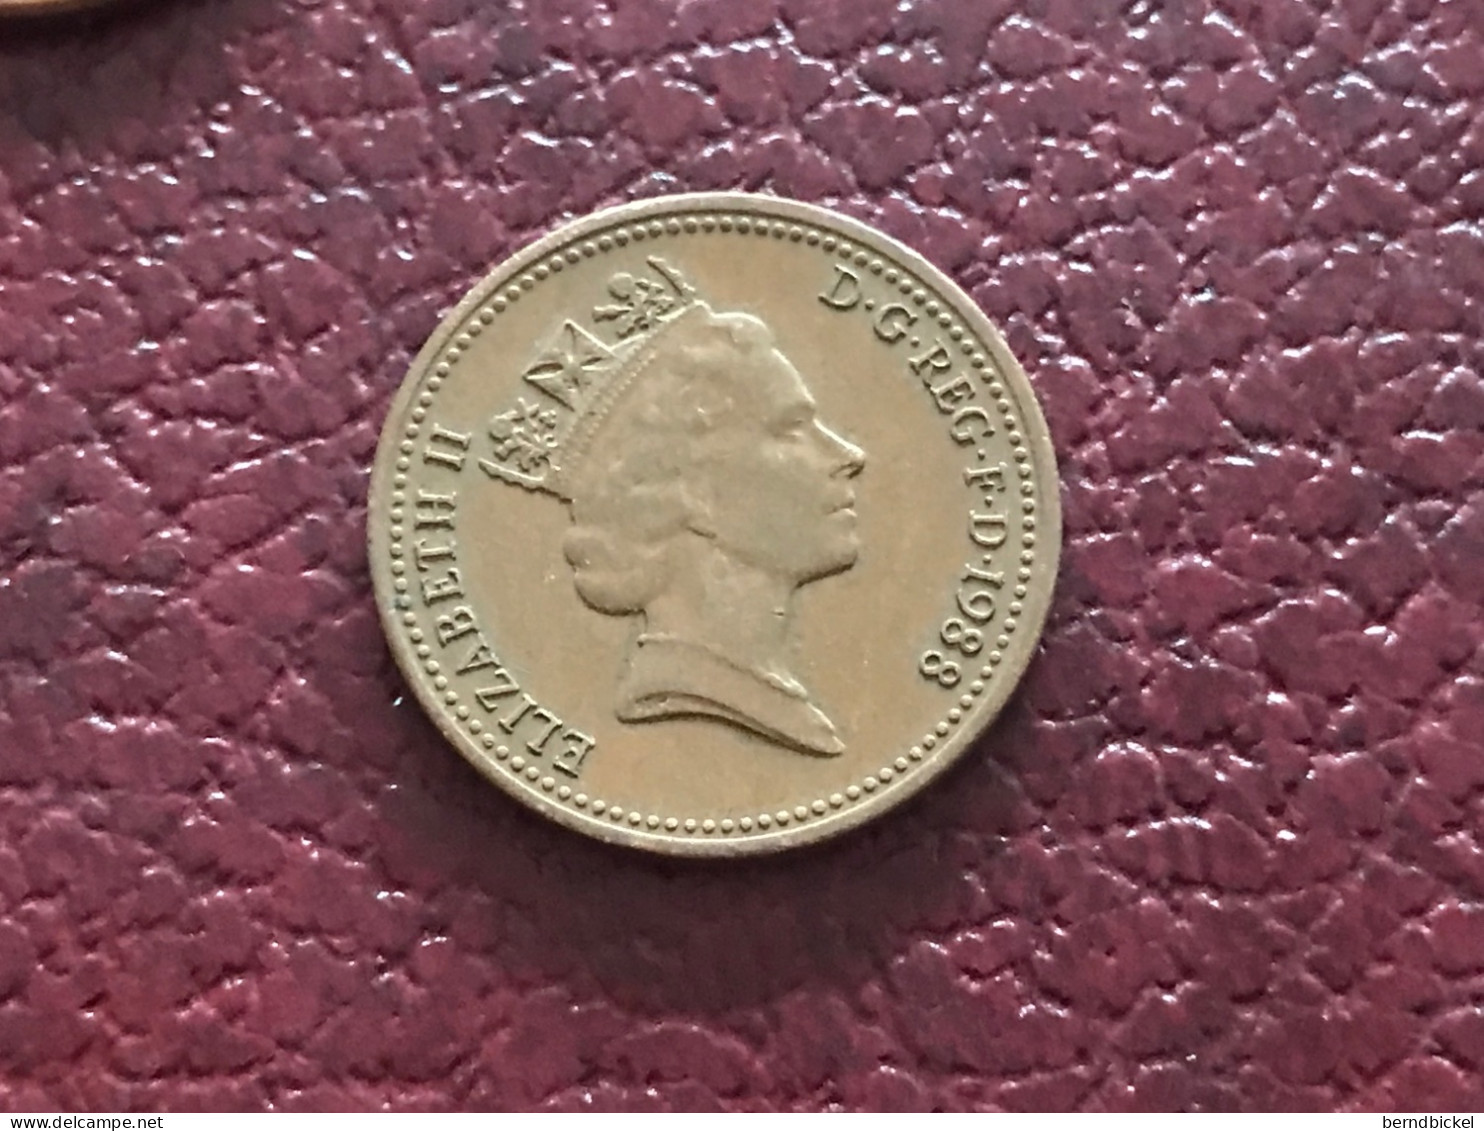 Münze Münzen Umlaufmünze Großbritannien 1 Penny 1988 - 1 Penny & 1 New Penny